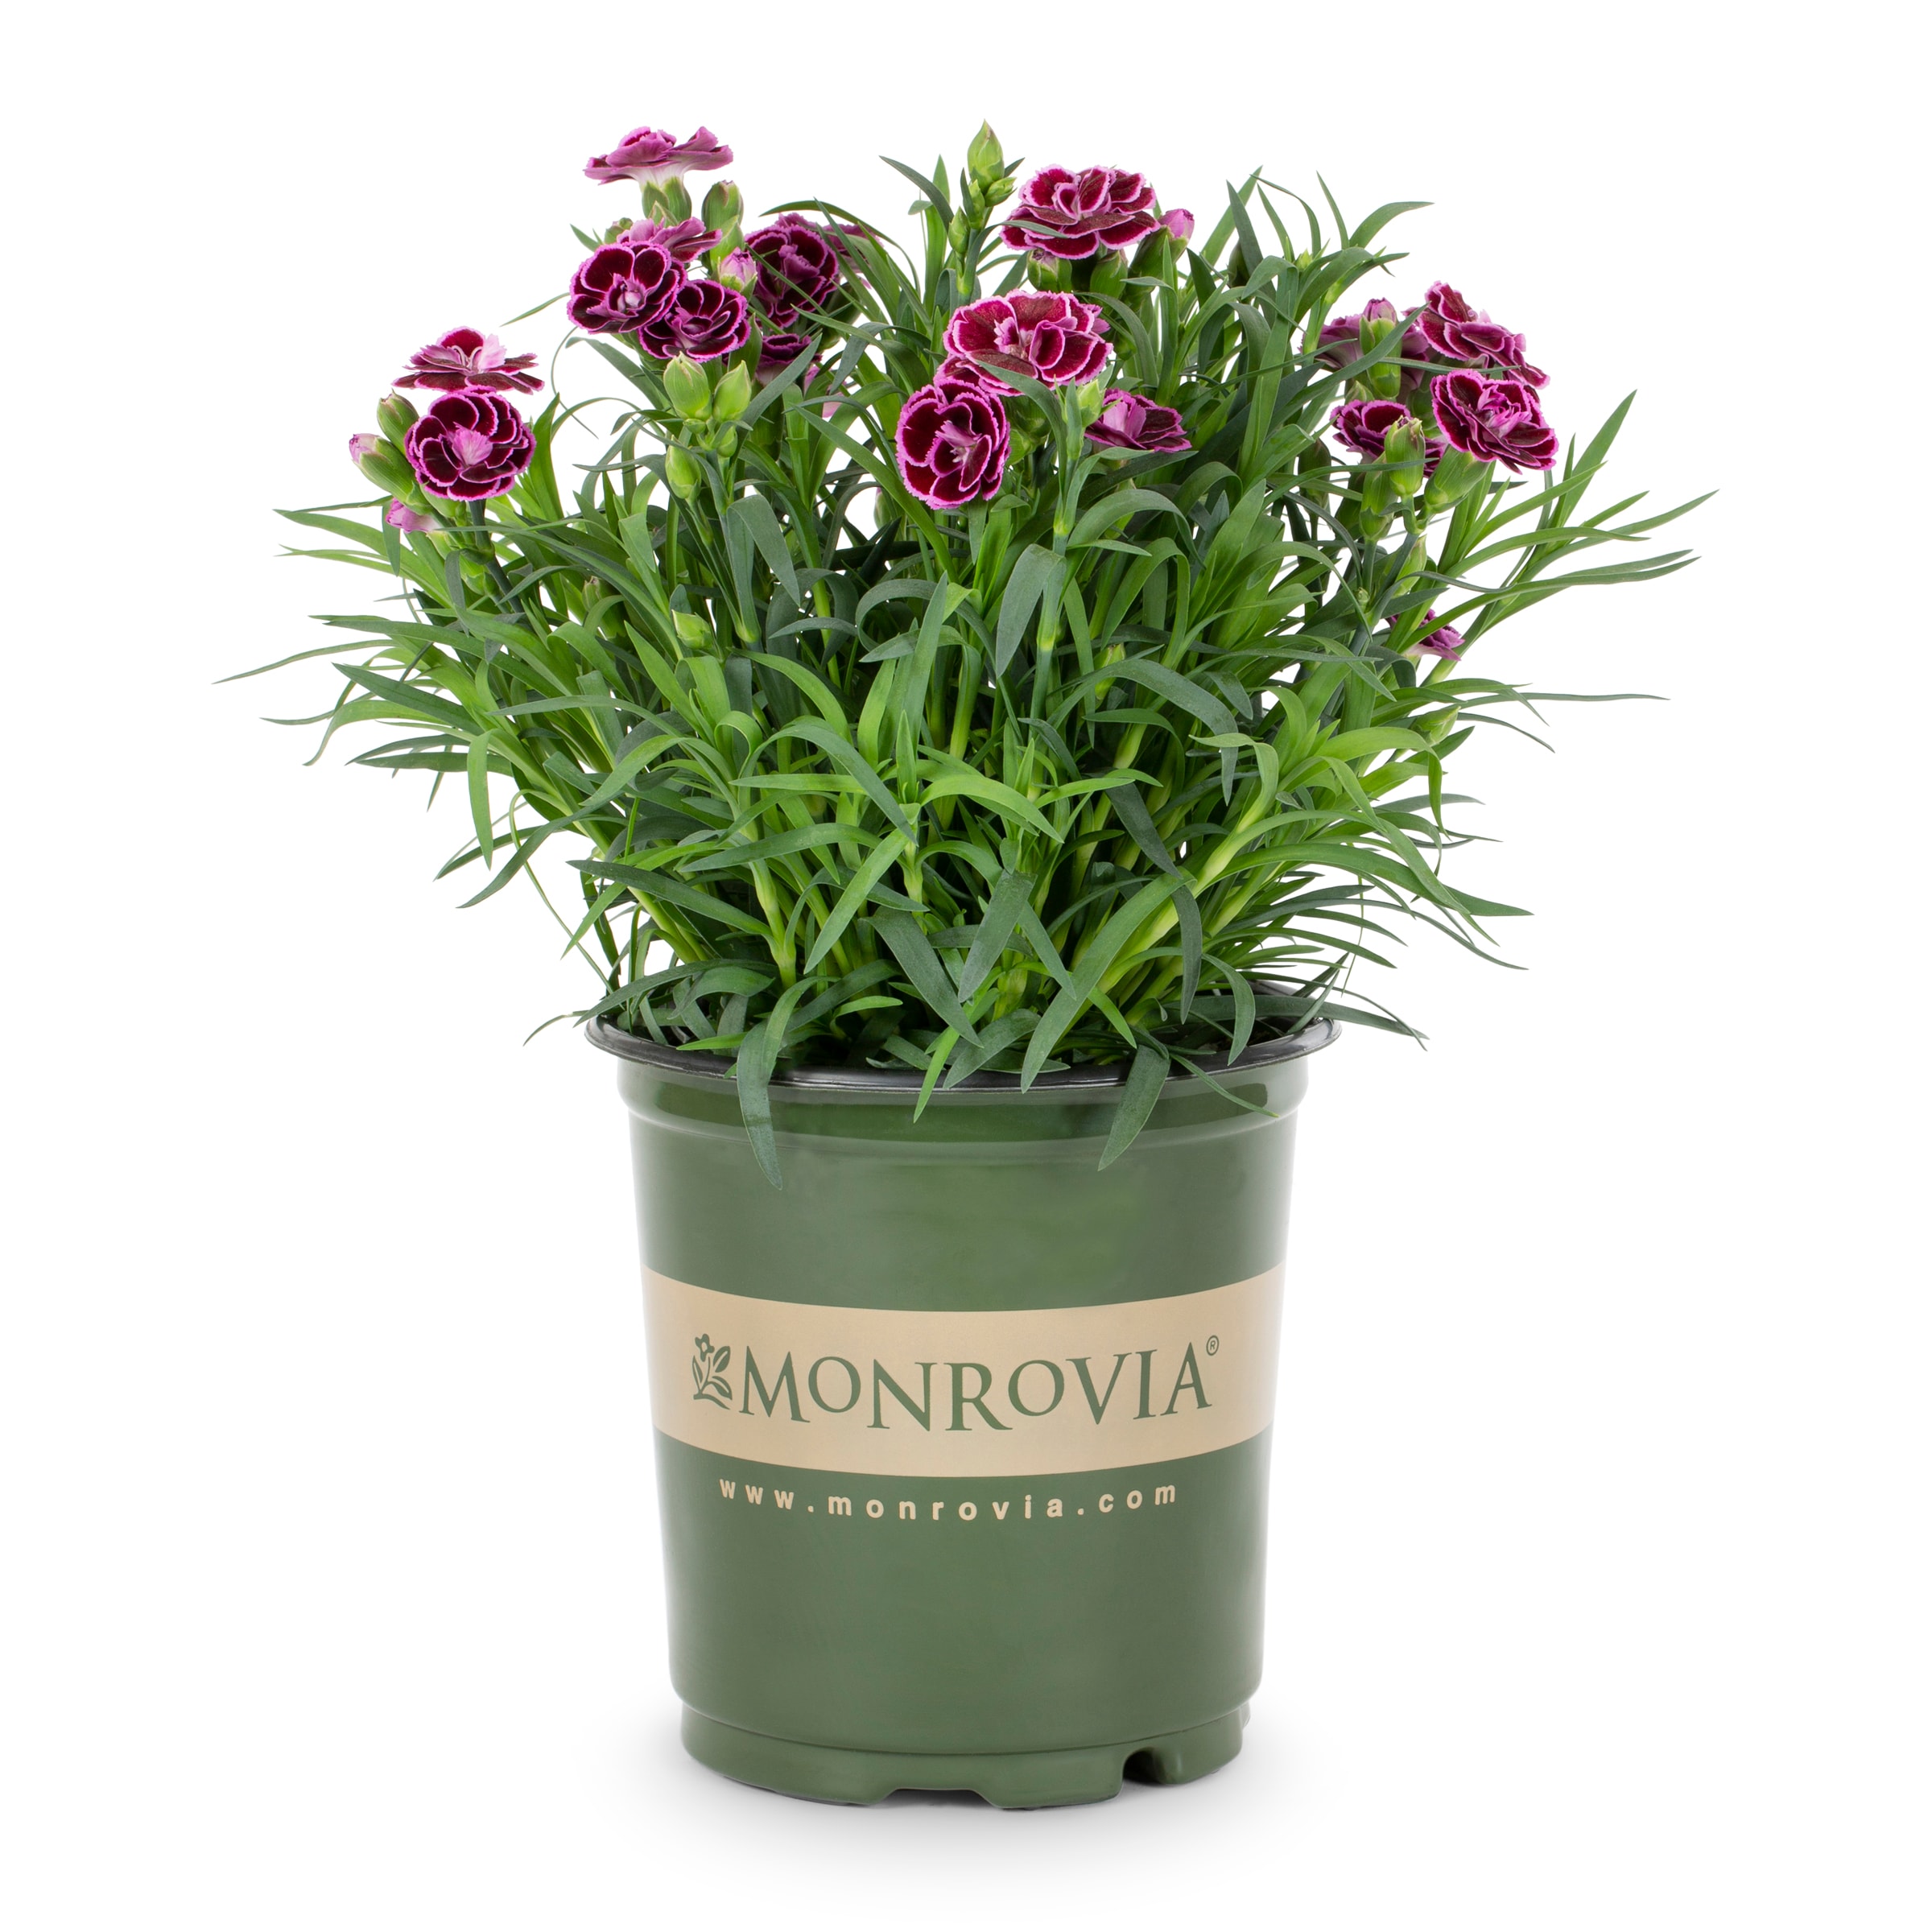 Super Trouper™ Dianthus Perennials at Lowes.com